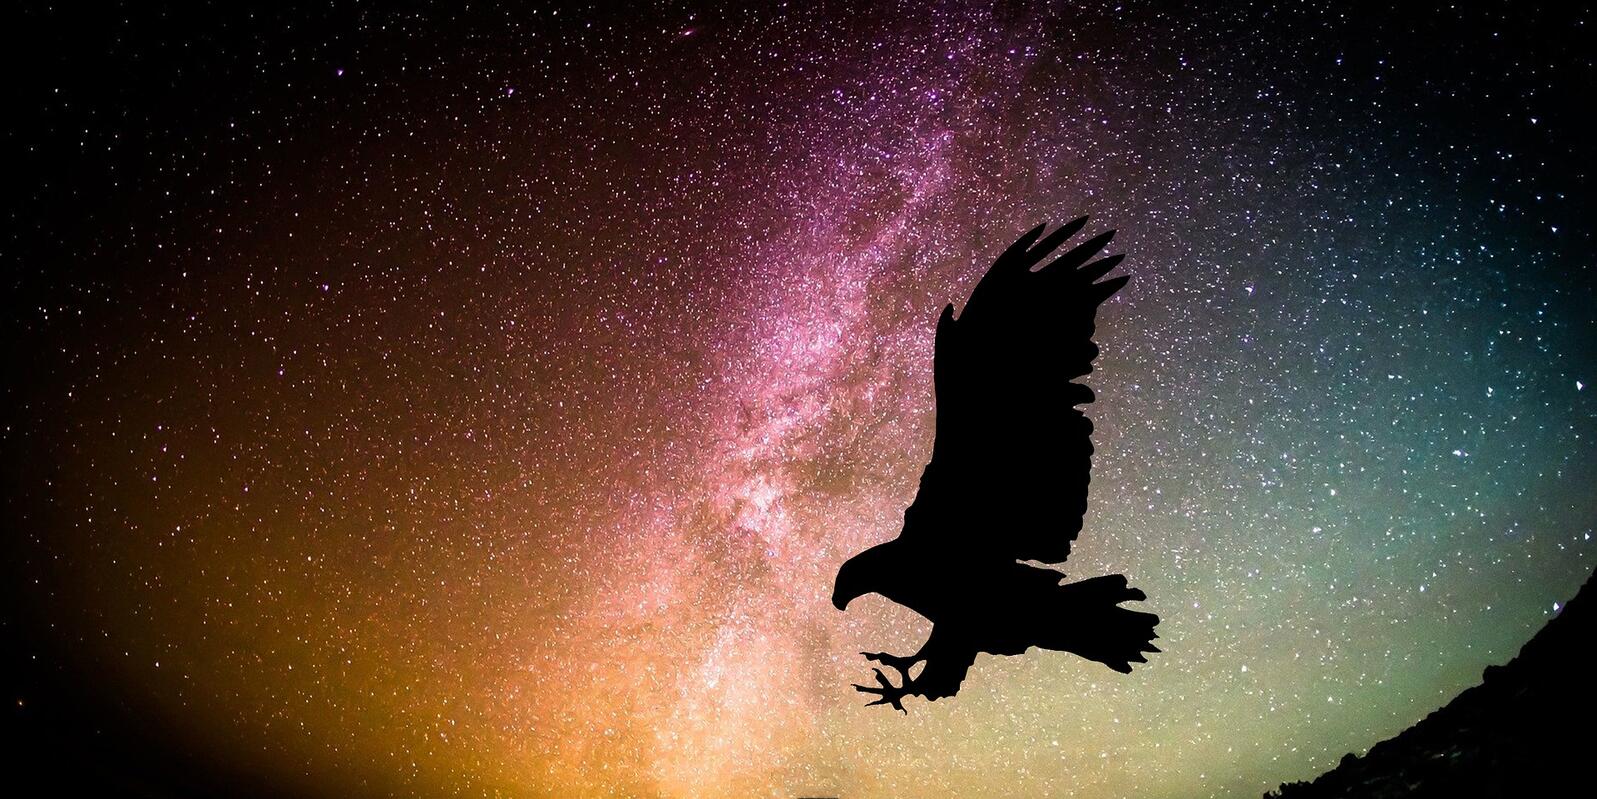 Eagle flying at night